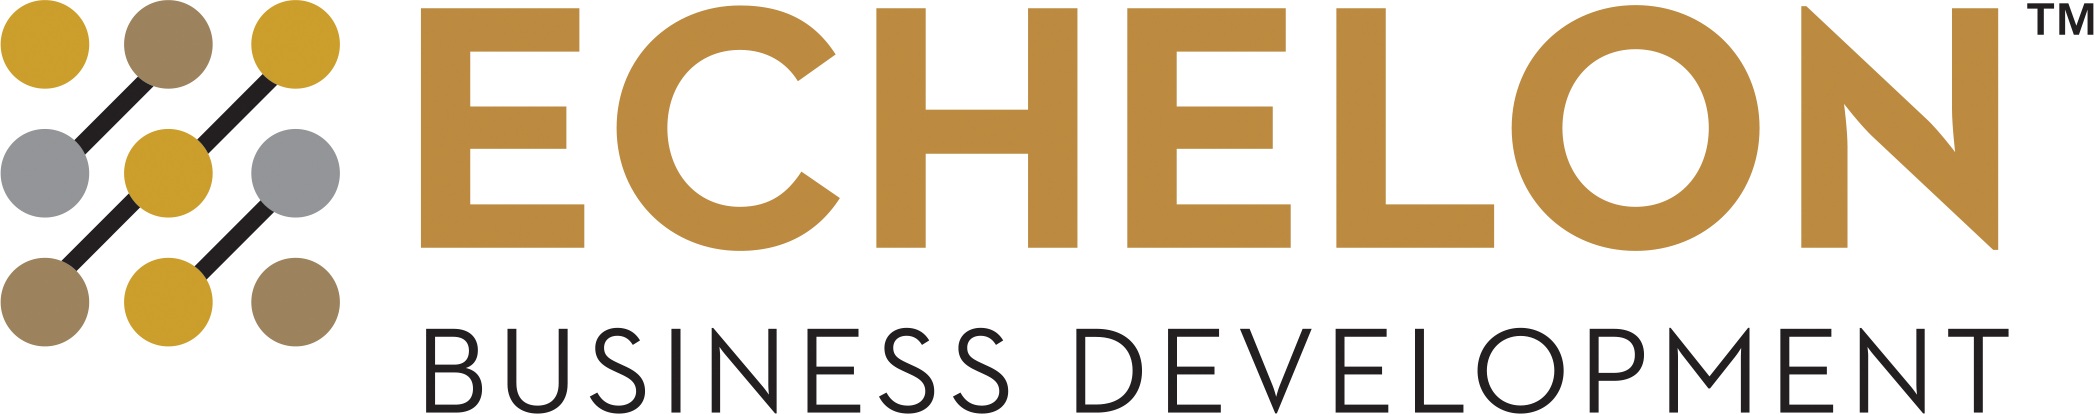 Echelon Business Development Network Logo Large